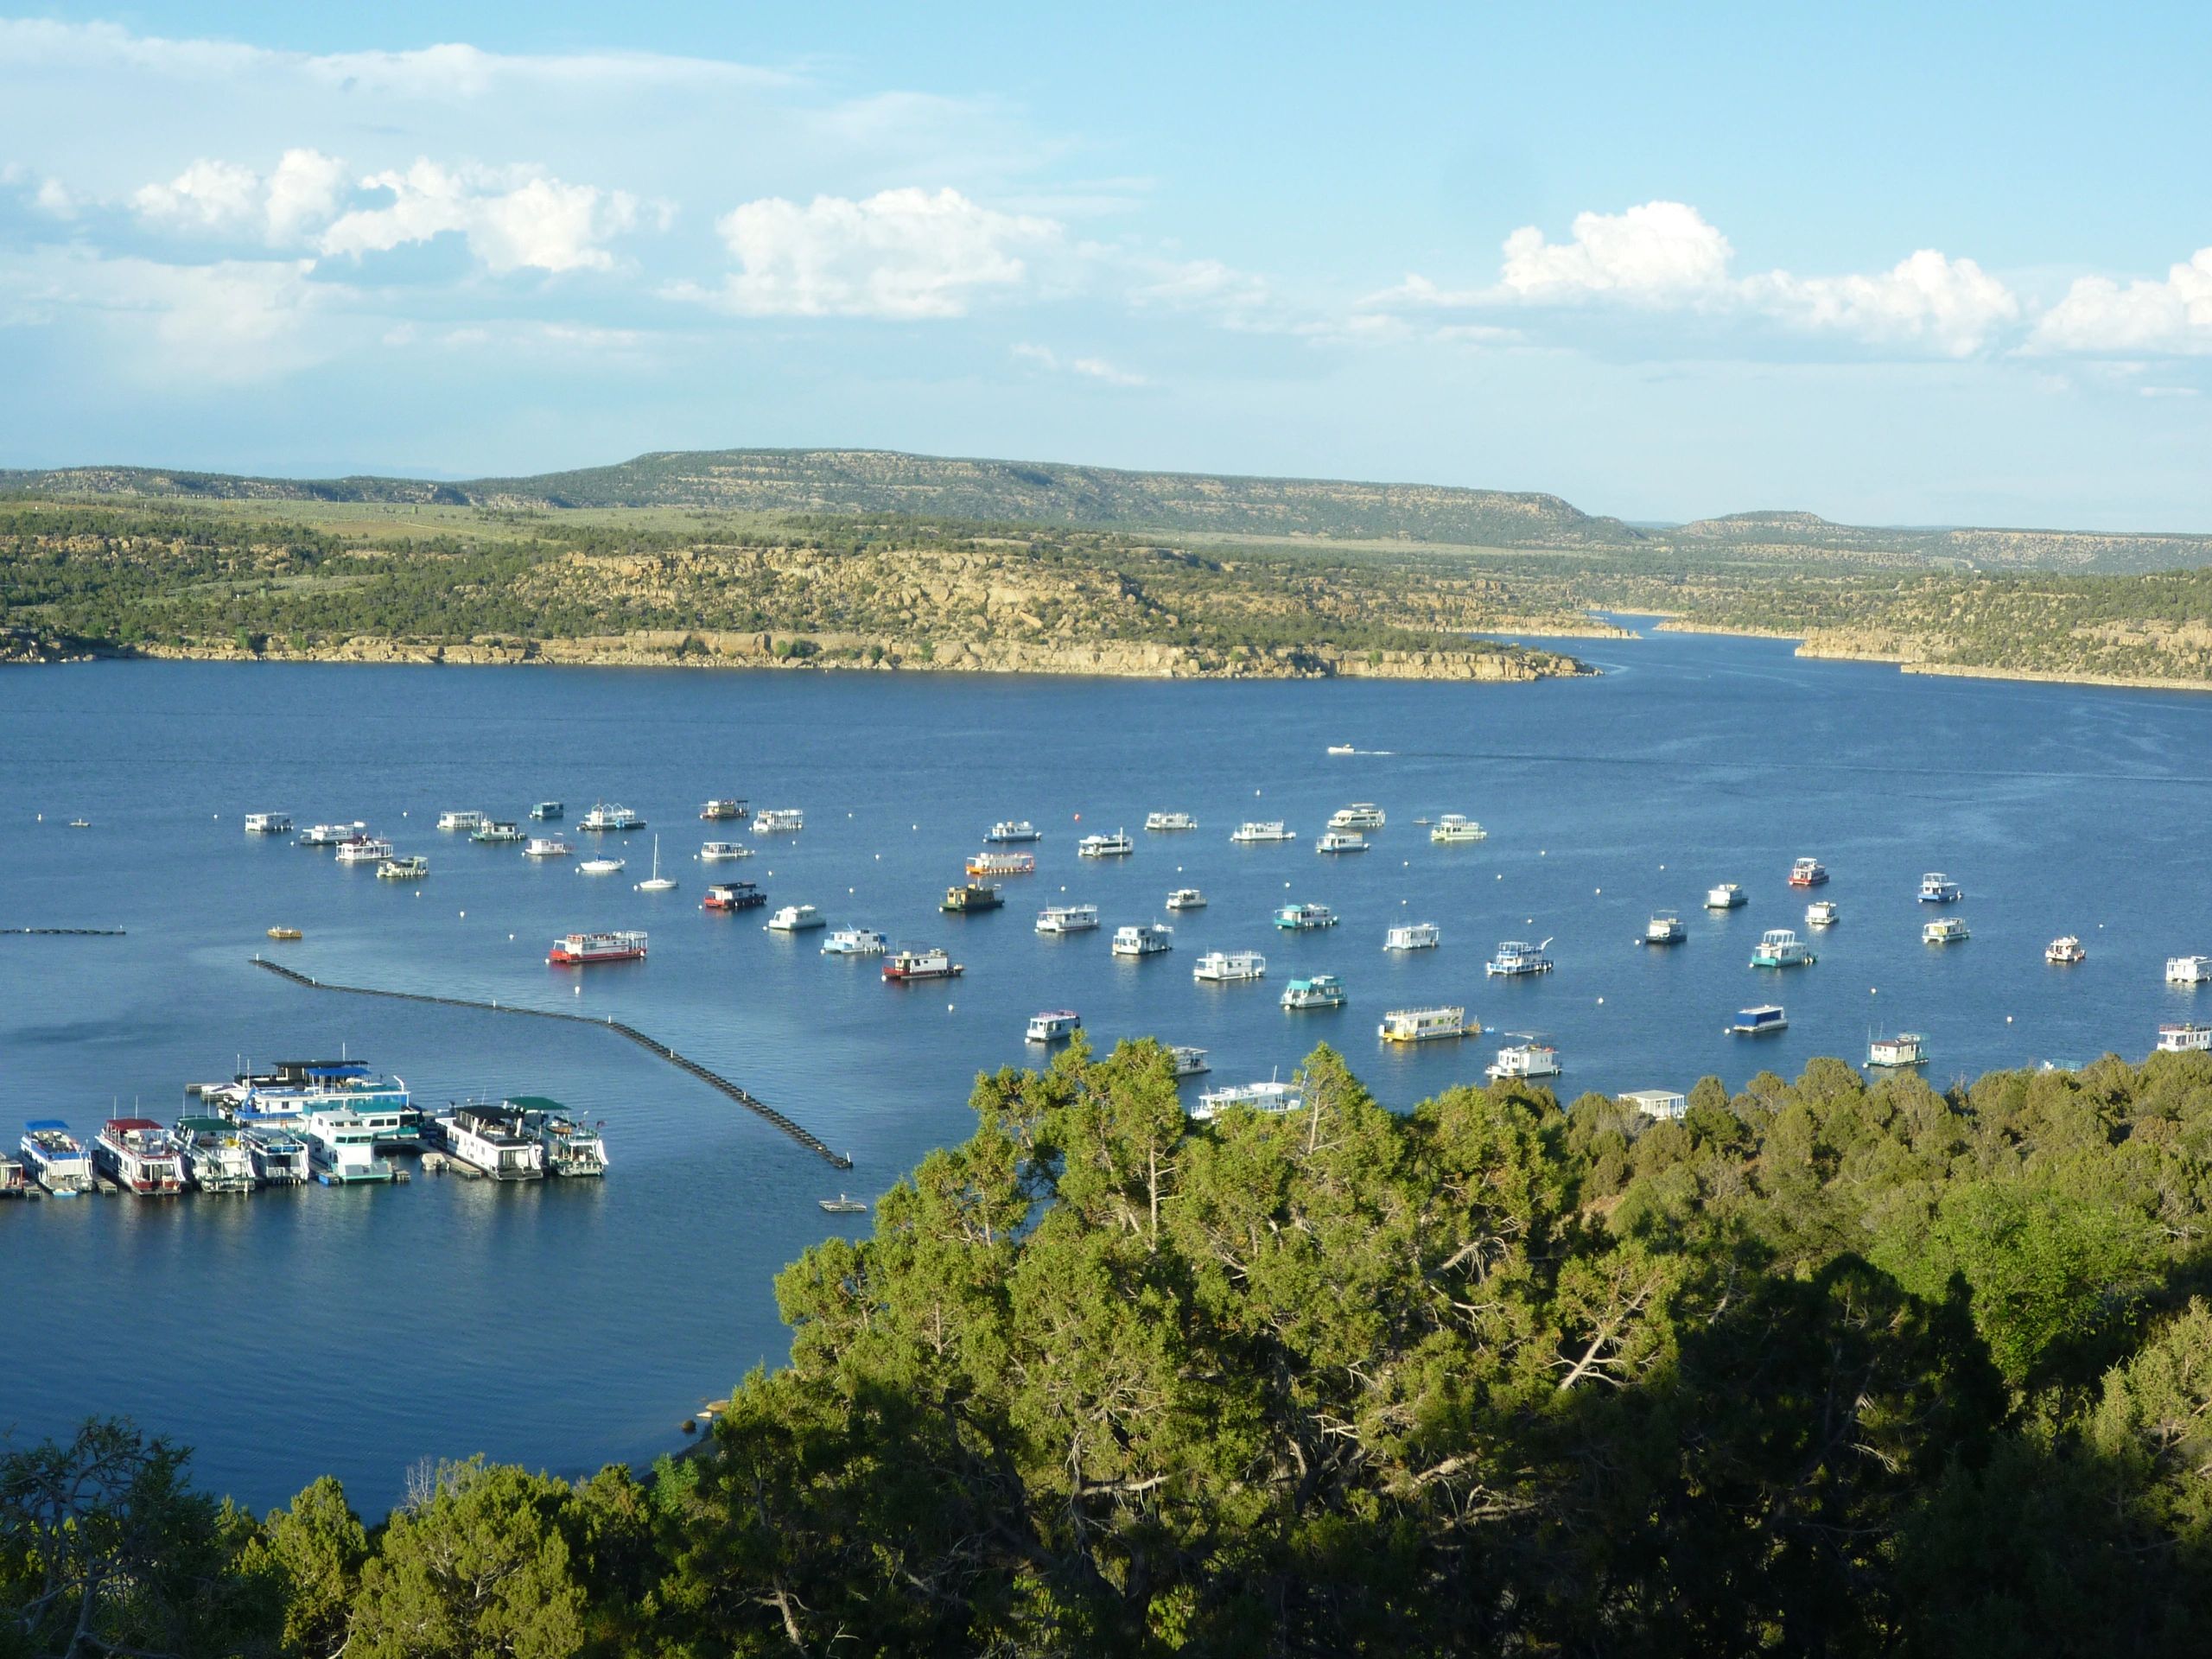  #Colorado 
Navajo reservoir
boat inspection. Survey
usaboatsurvey.com